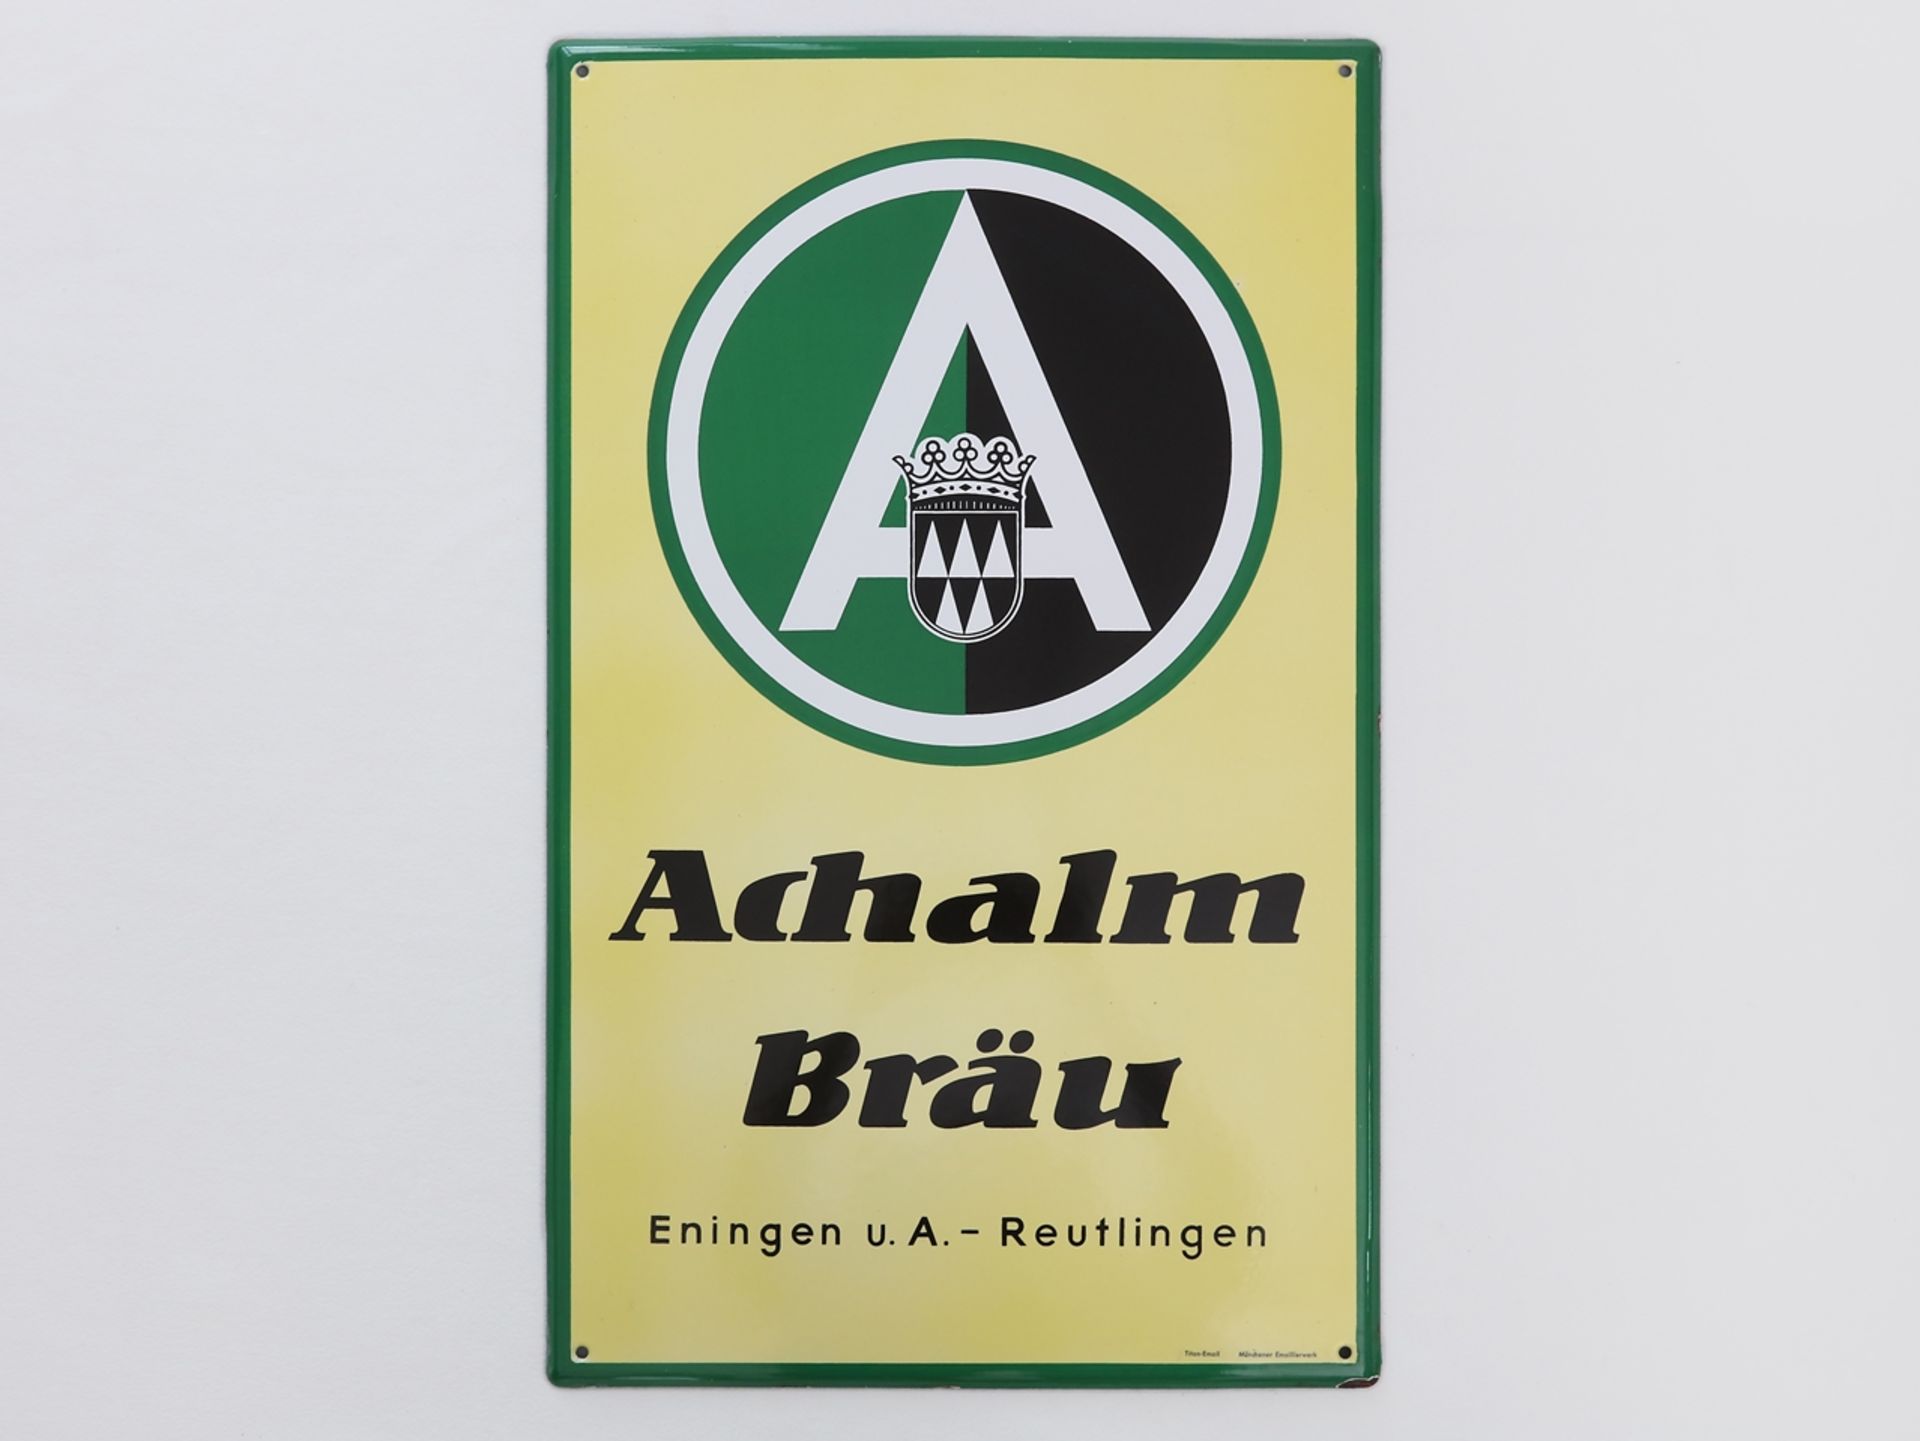 Enamel sign Achalm Bräu, Eningen u.A. - Reutlingen, around 1950 - Image 7 of 7